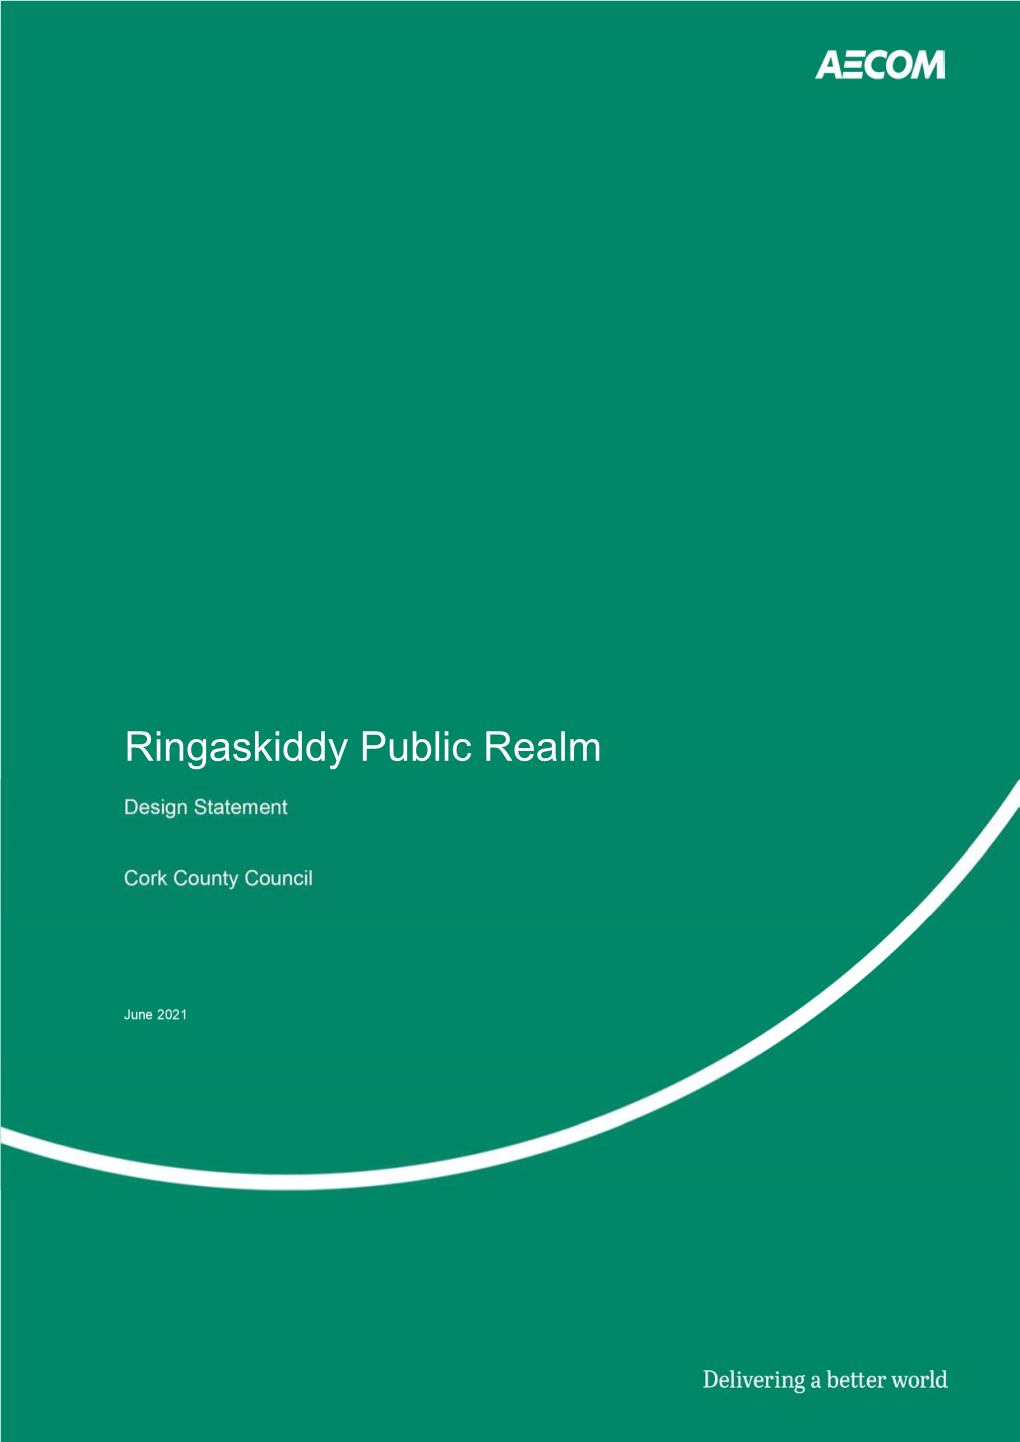 8 Ringaskiddy Public Realm-Design Statement